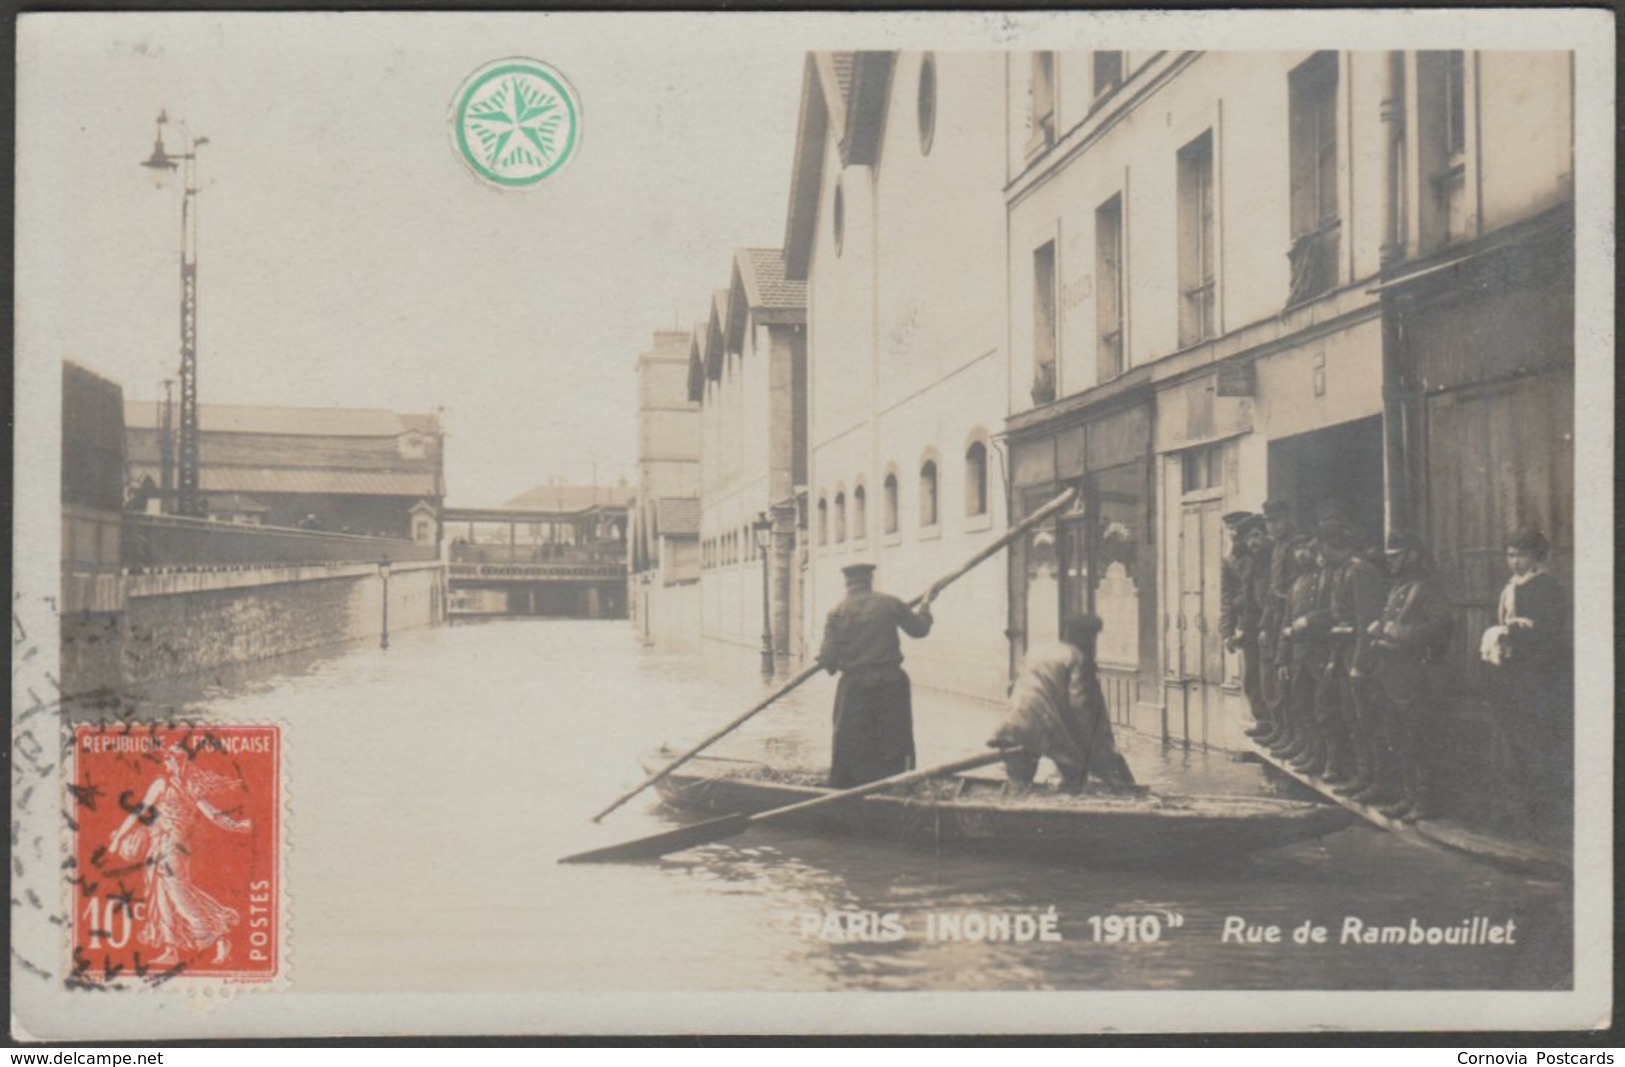 Rue De Rambouillet, Paris Inondé, 1910 - AHB Photo CPA - Esperanto Verda Stelo - Paris Flood, 1910